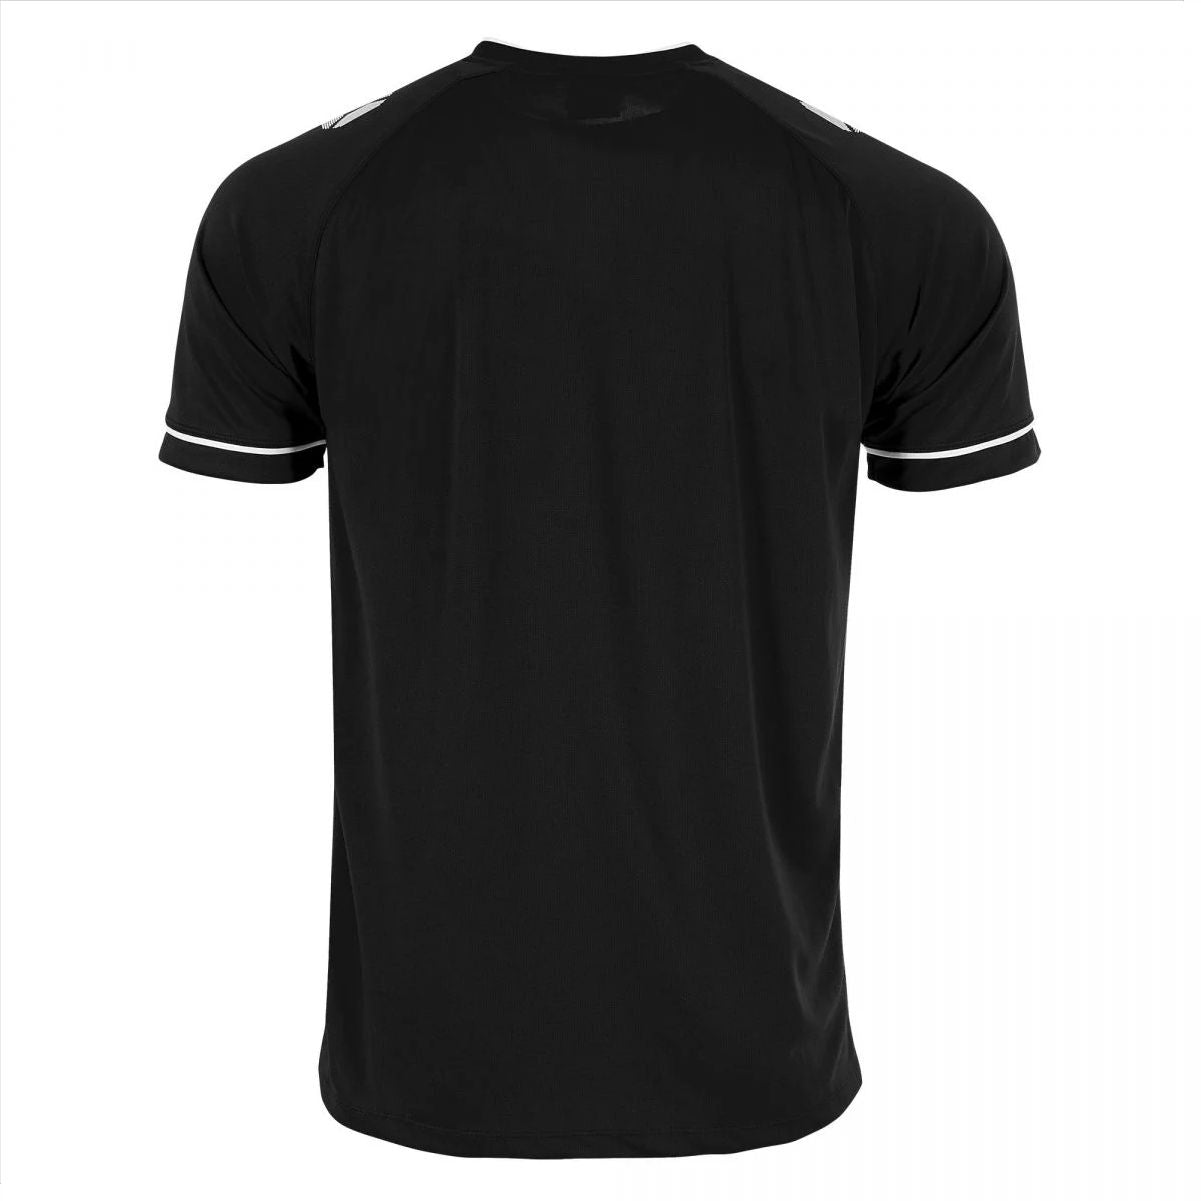 Stanno - Dash Shirt - Black And White